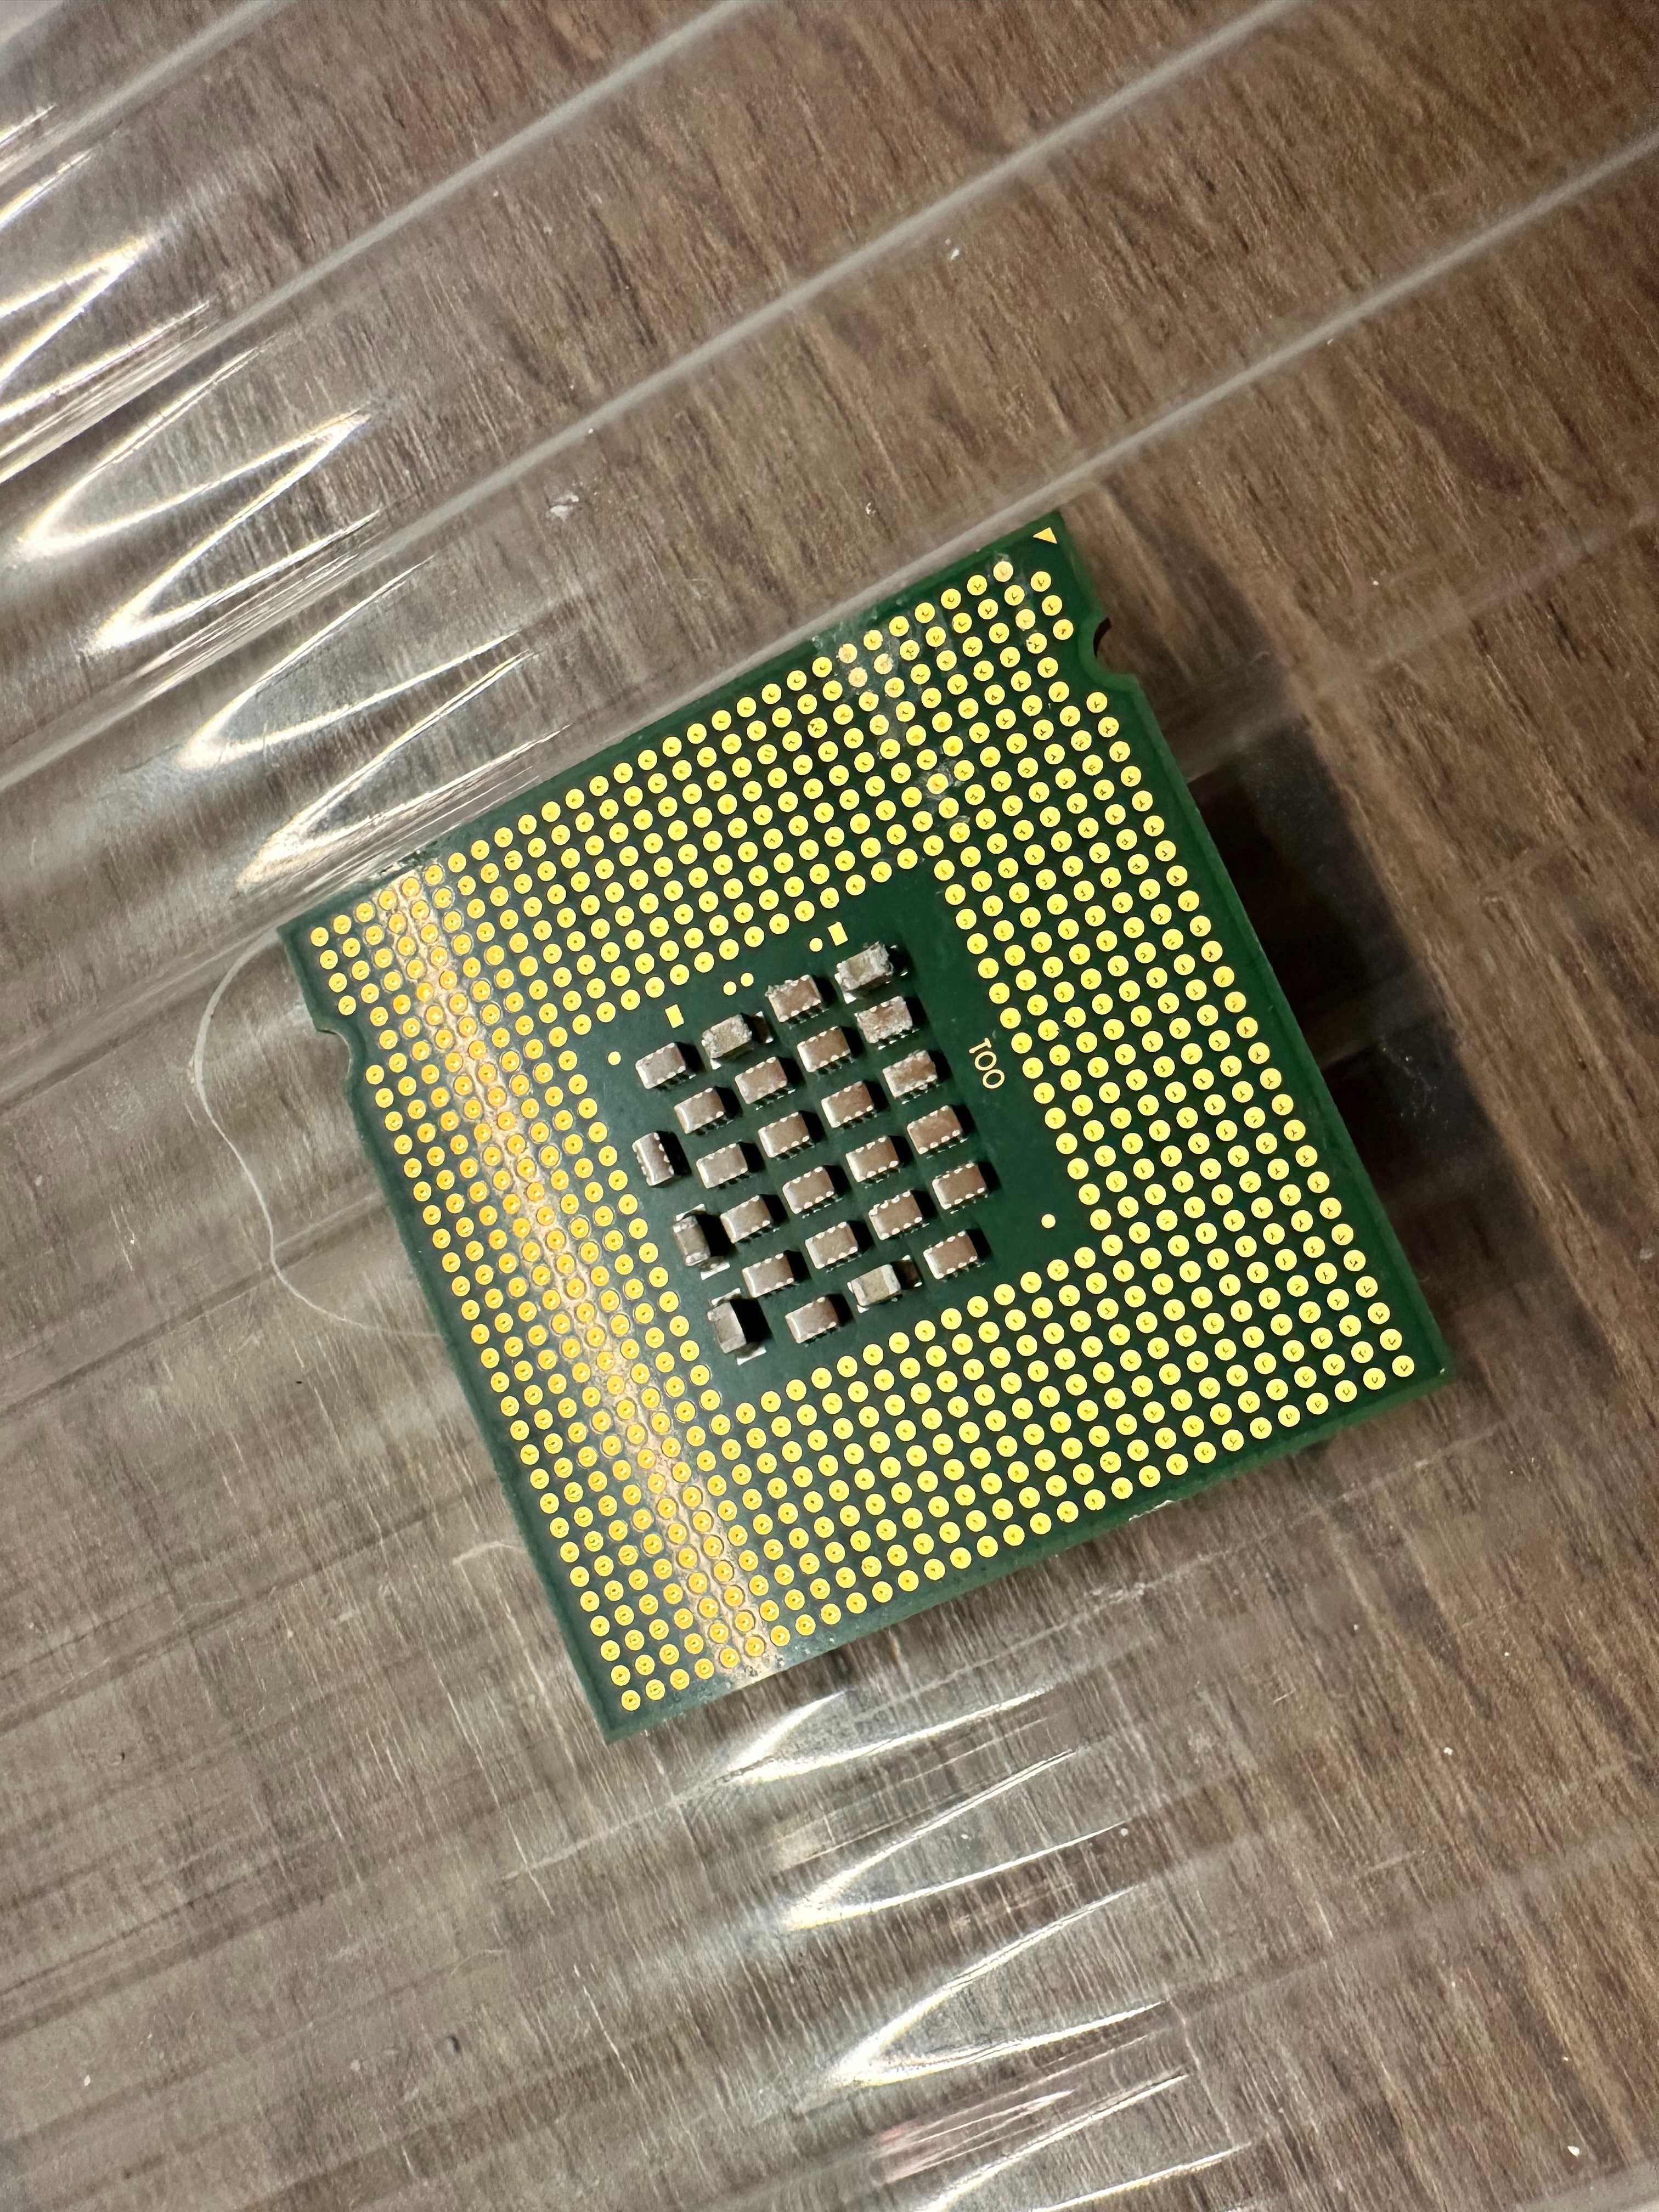 Intel Celeron D 336 2,8/256/533 SL7TW